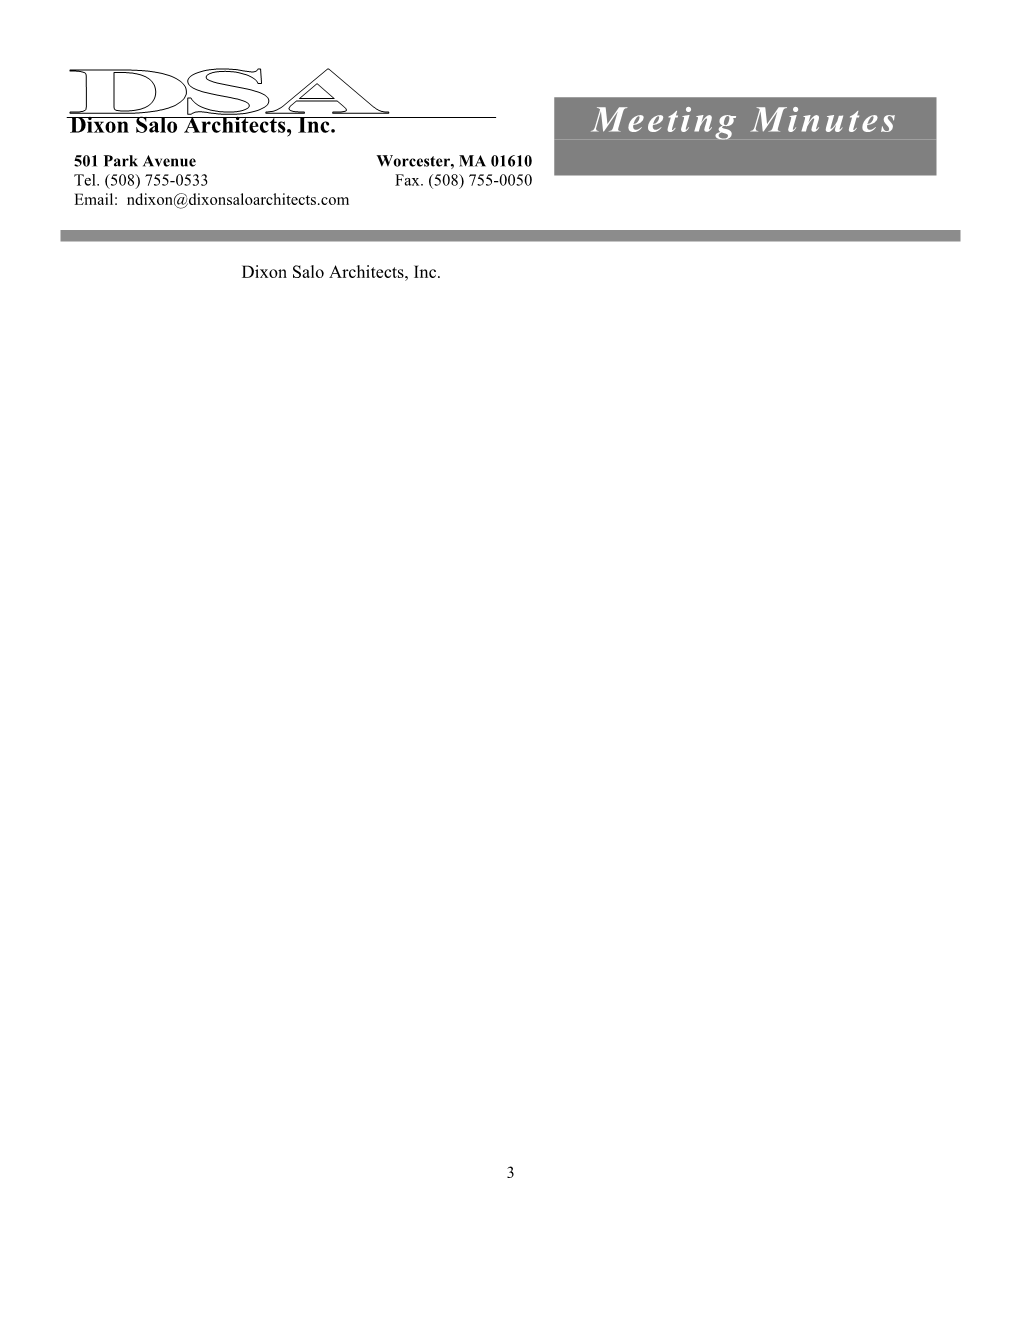 DSA Fax Cover Sheet